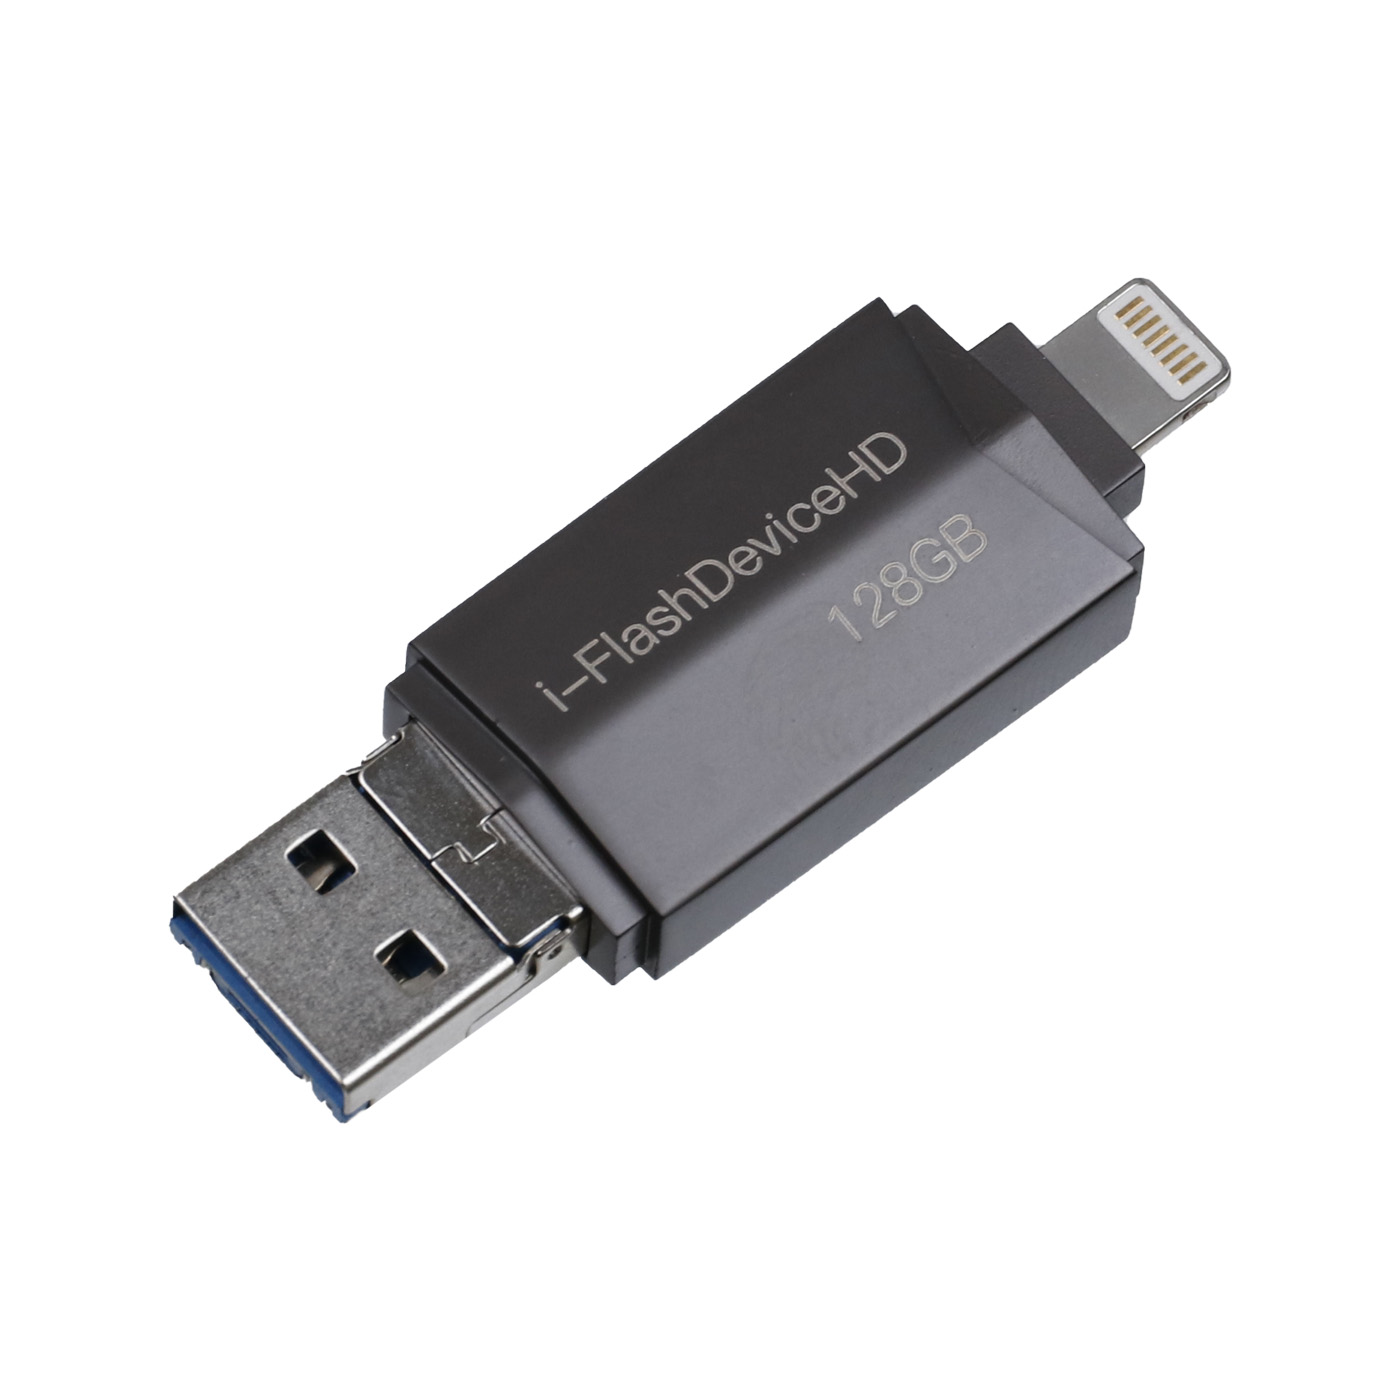 128GB USBメモリ iXpand Flash Drive Flip SanDisk サンディスク